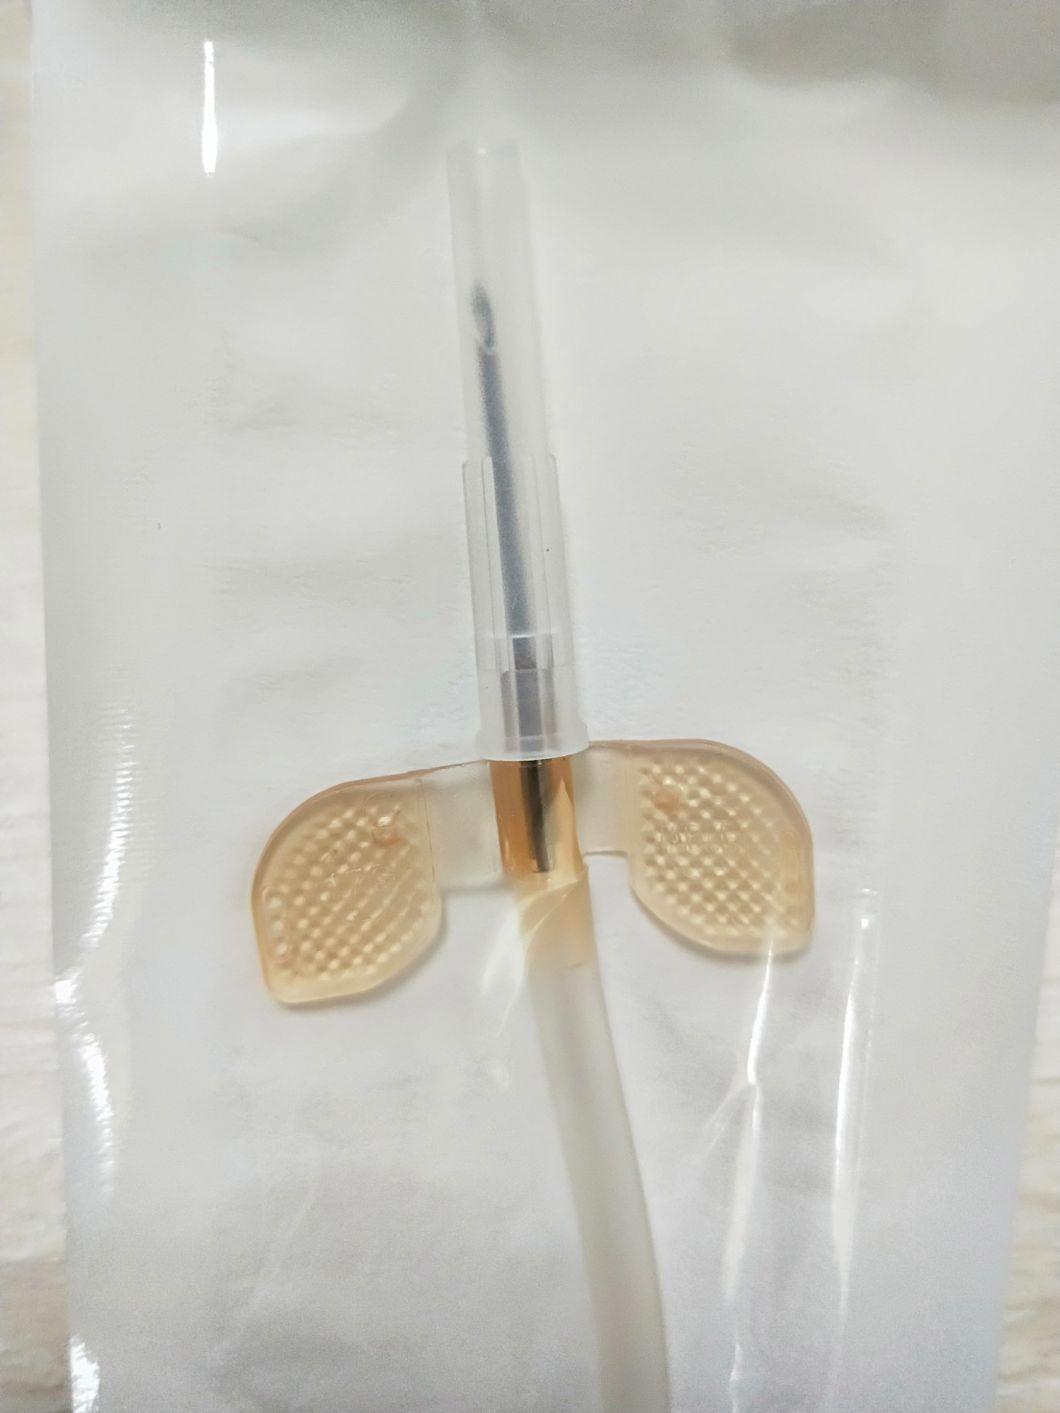 Disposable Sterile Arteriovenous AV Fistula Needle CE Marked